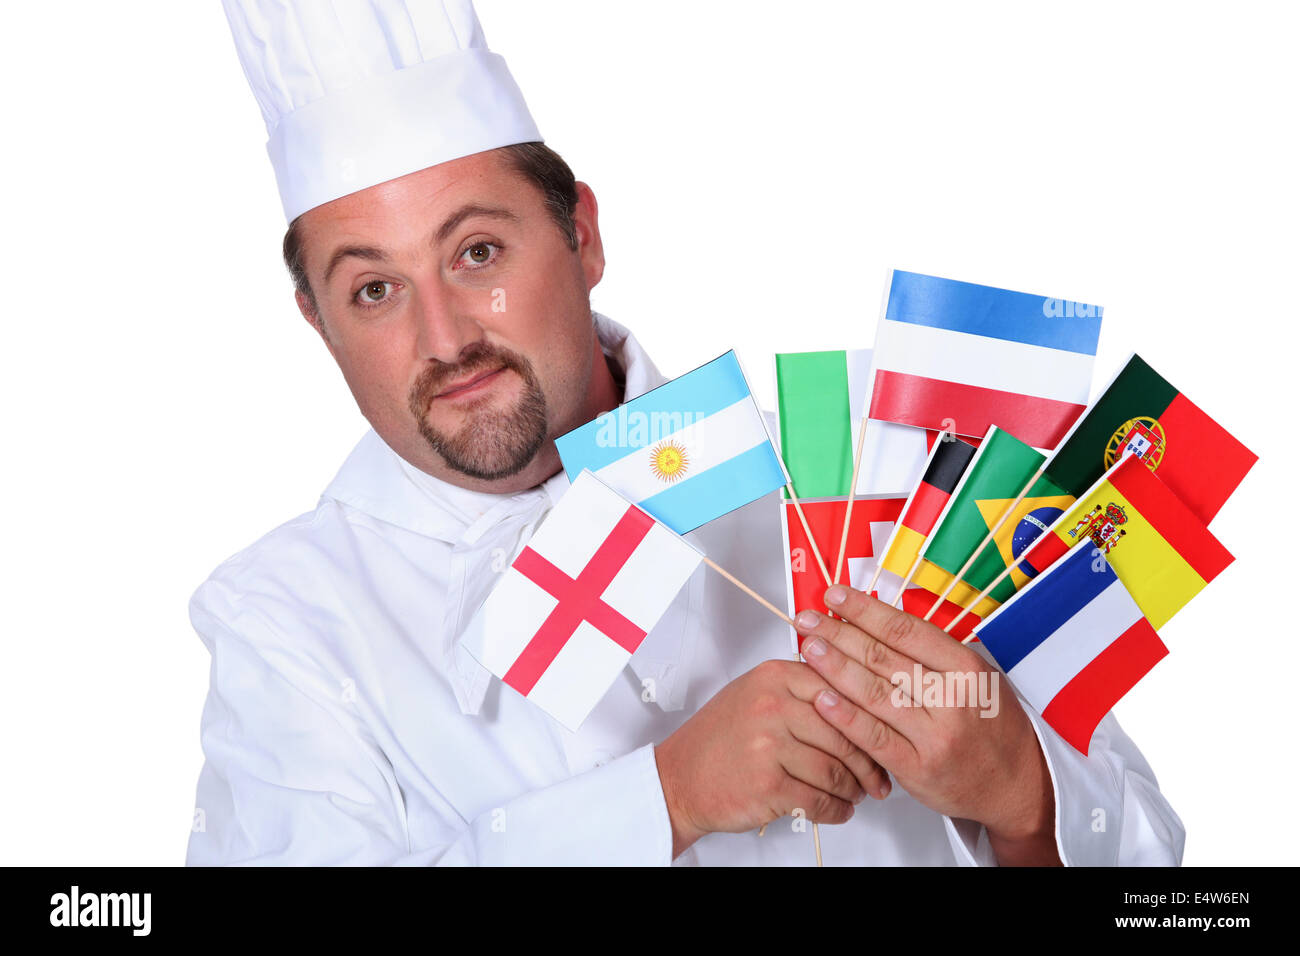 World cuisine chef Stock Photo